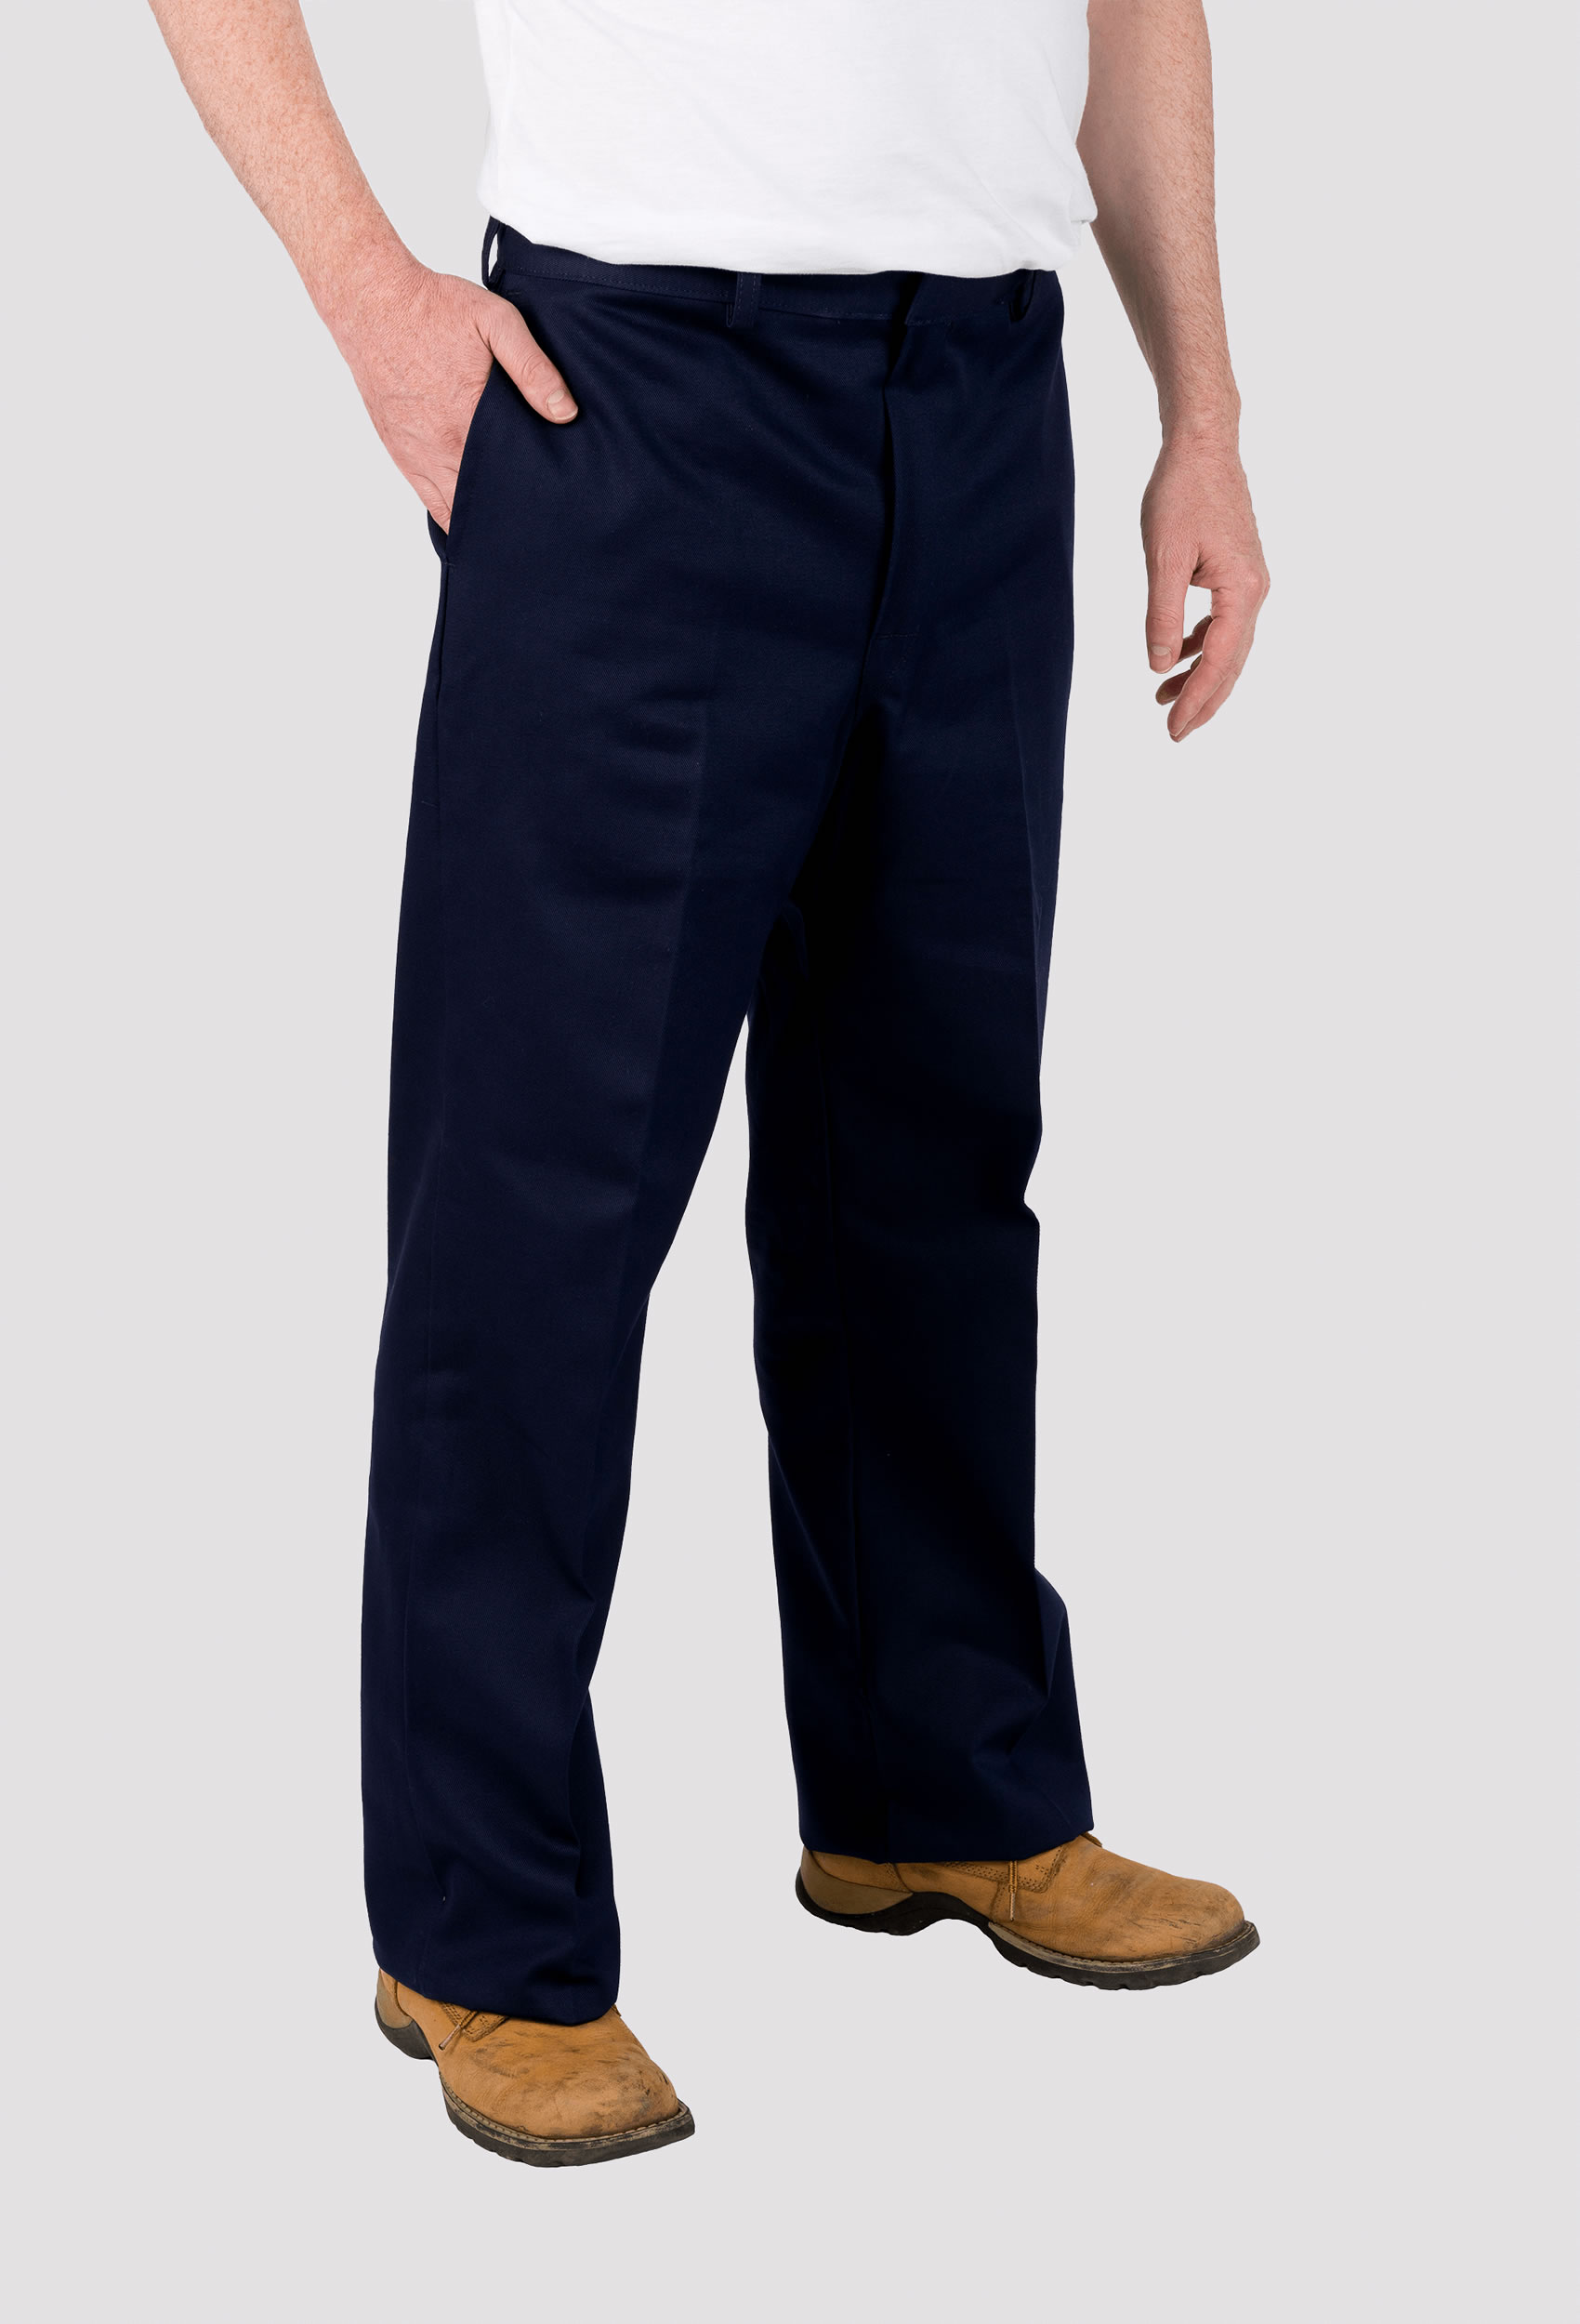 Navy Blue - Cotton Drill Work Pants - Spartan Workwear